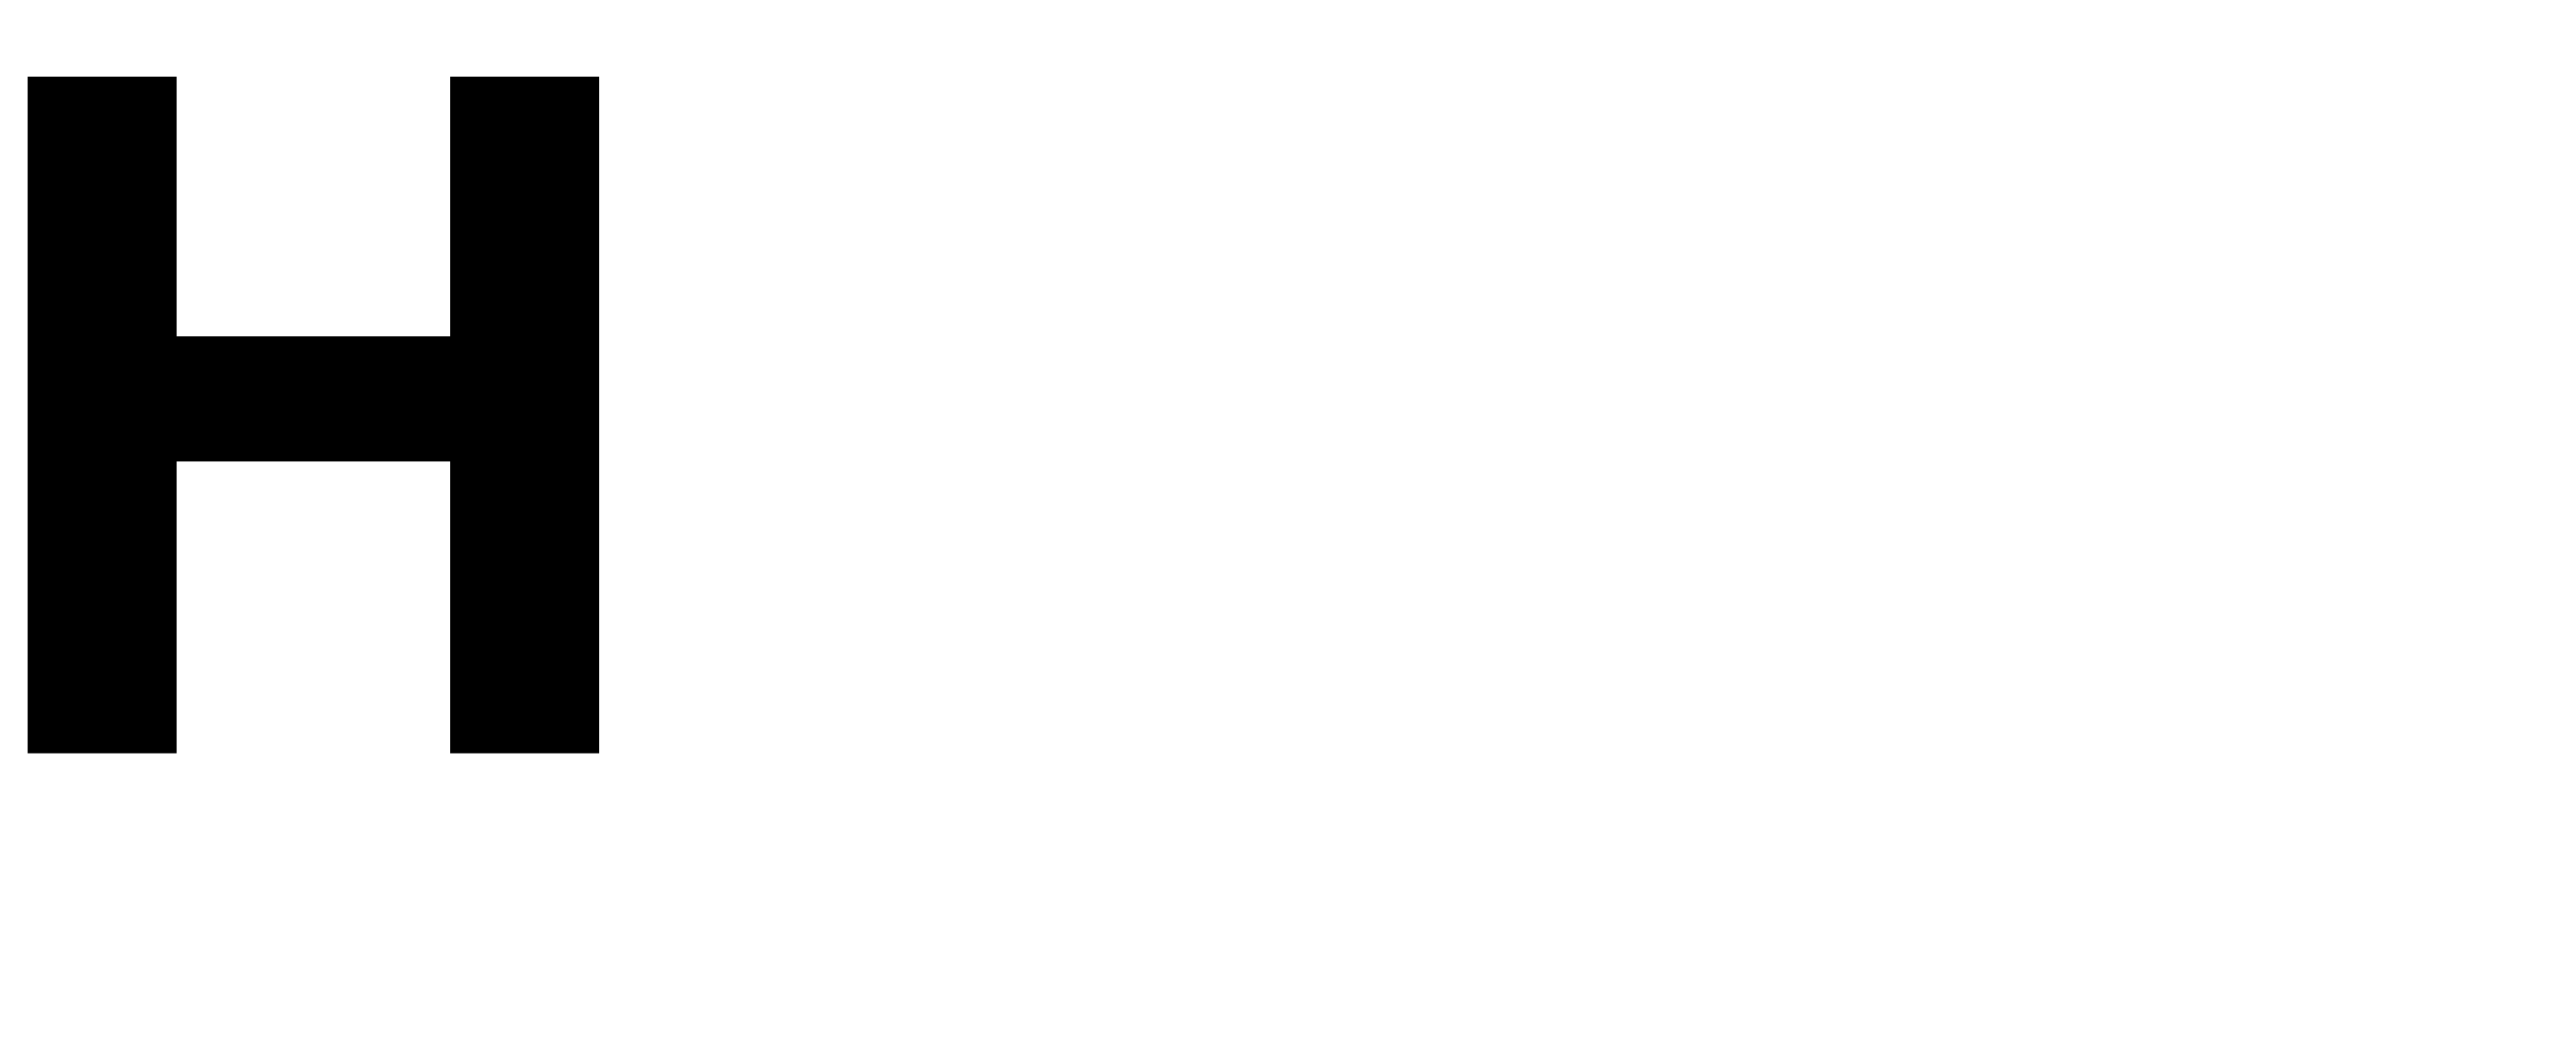 Logo HiTDB black and white